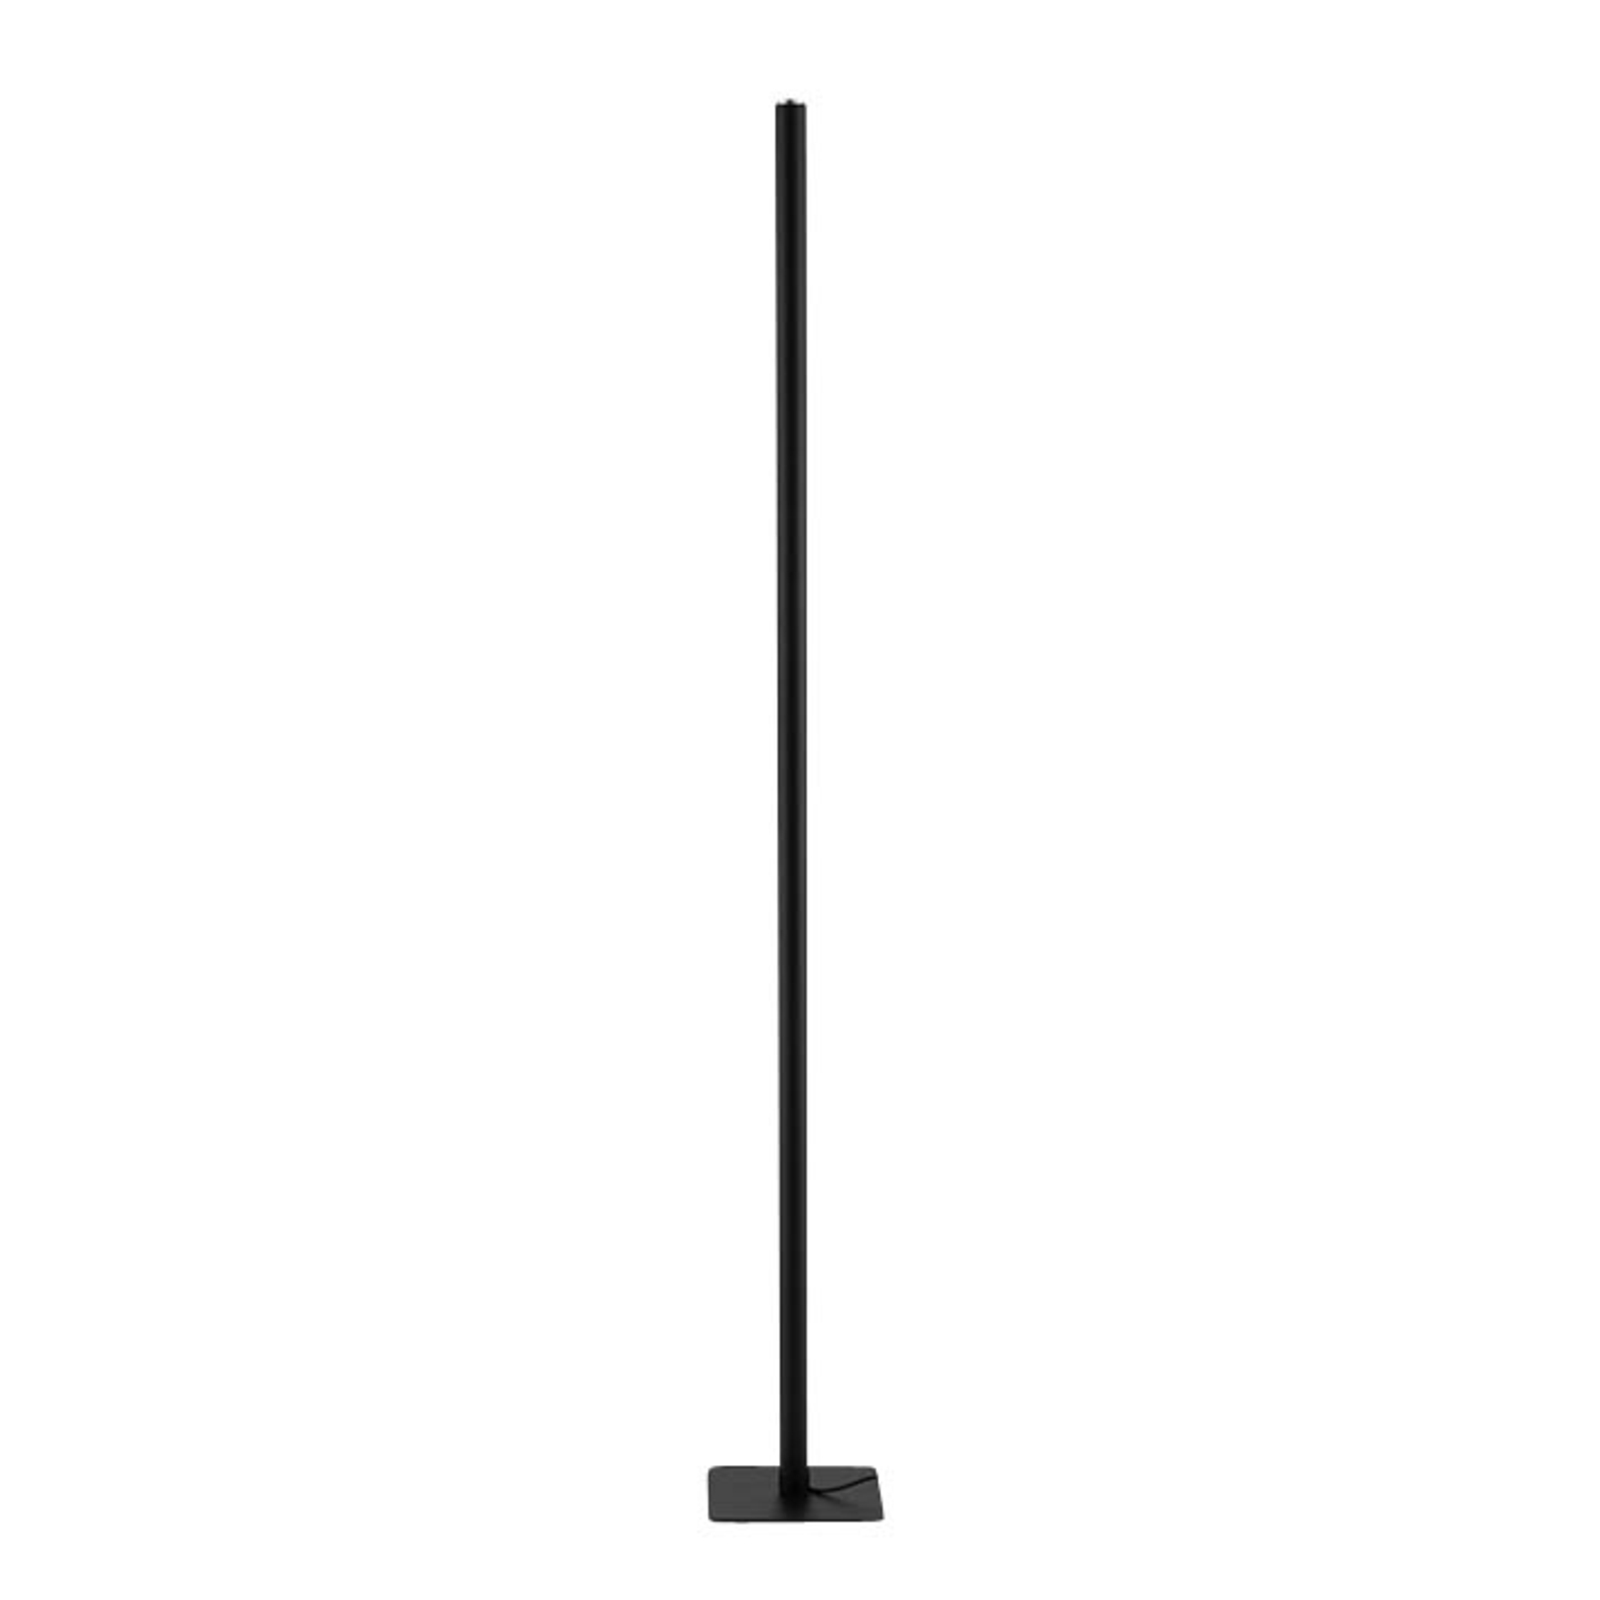 Artemide Ilio mini floor lamp app black 2,700 K